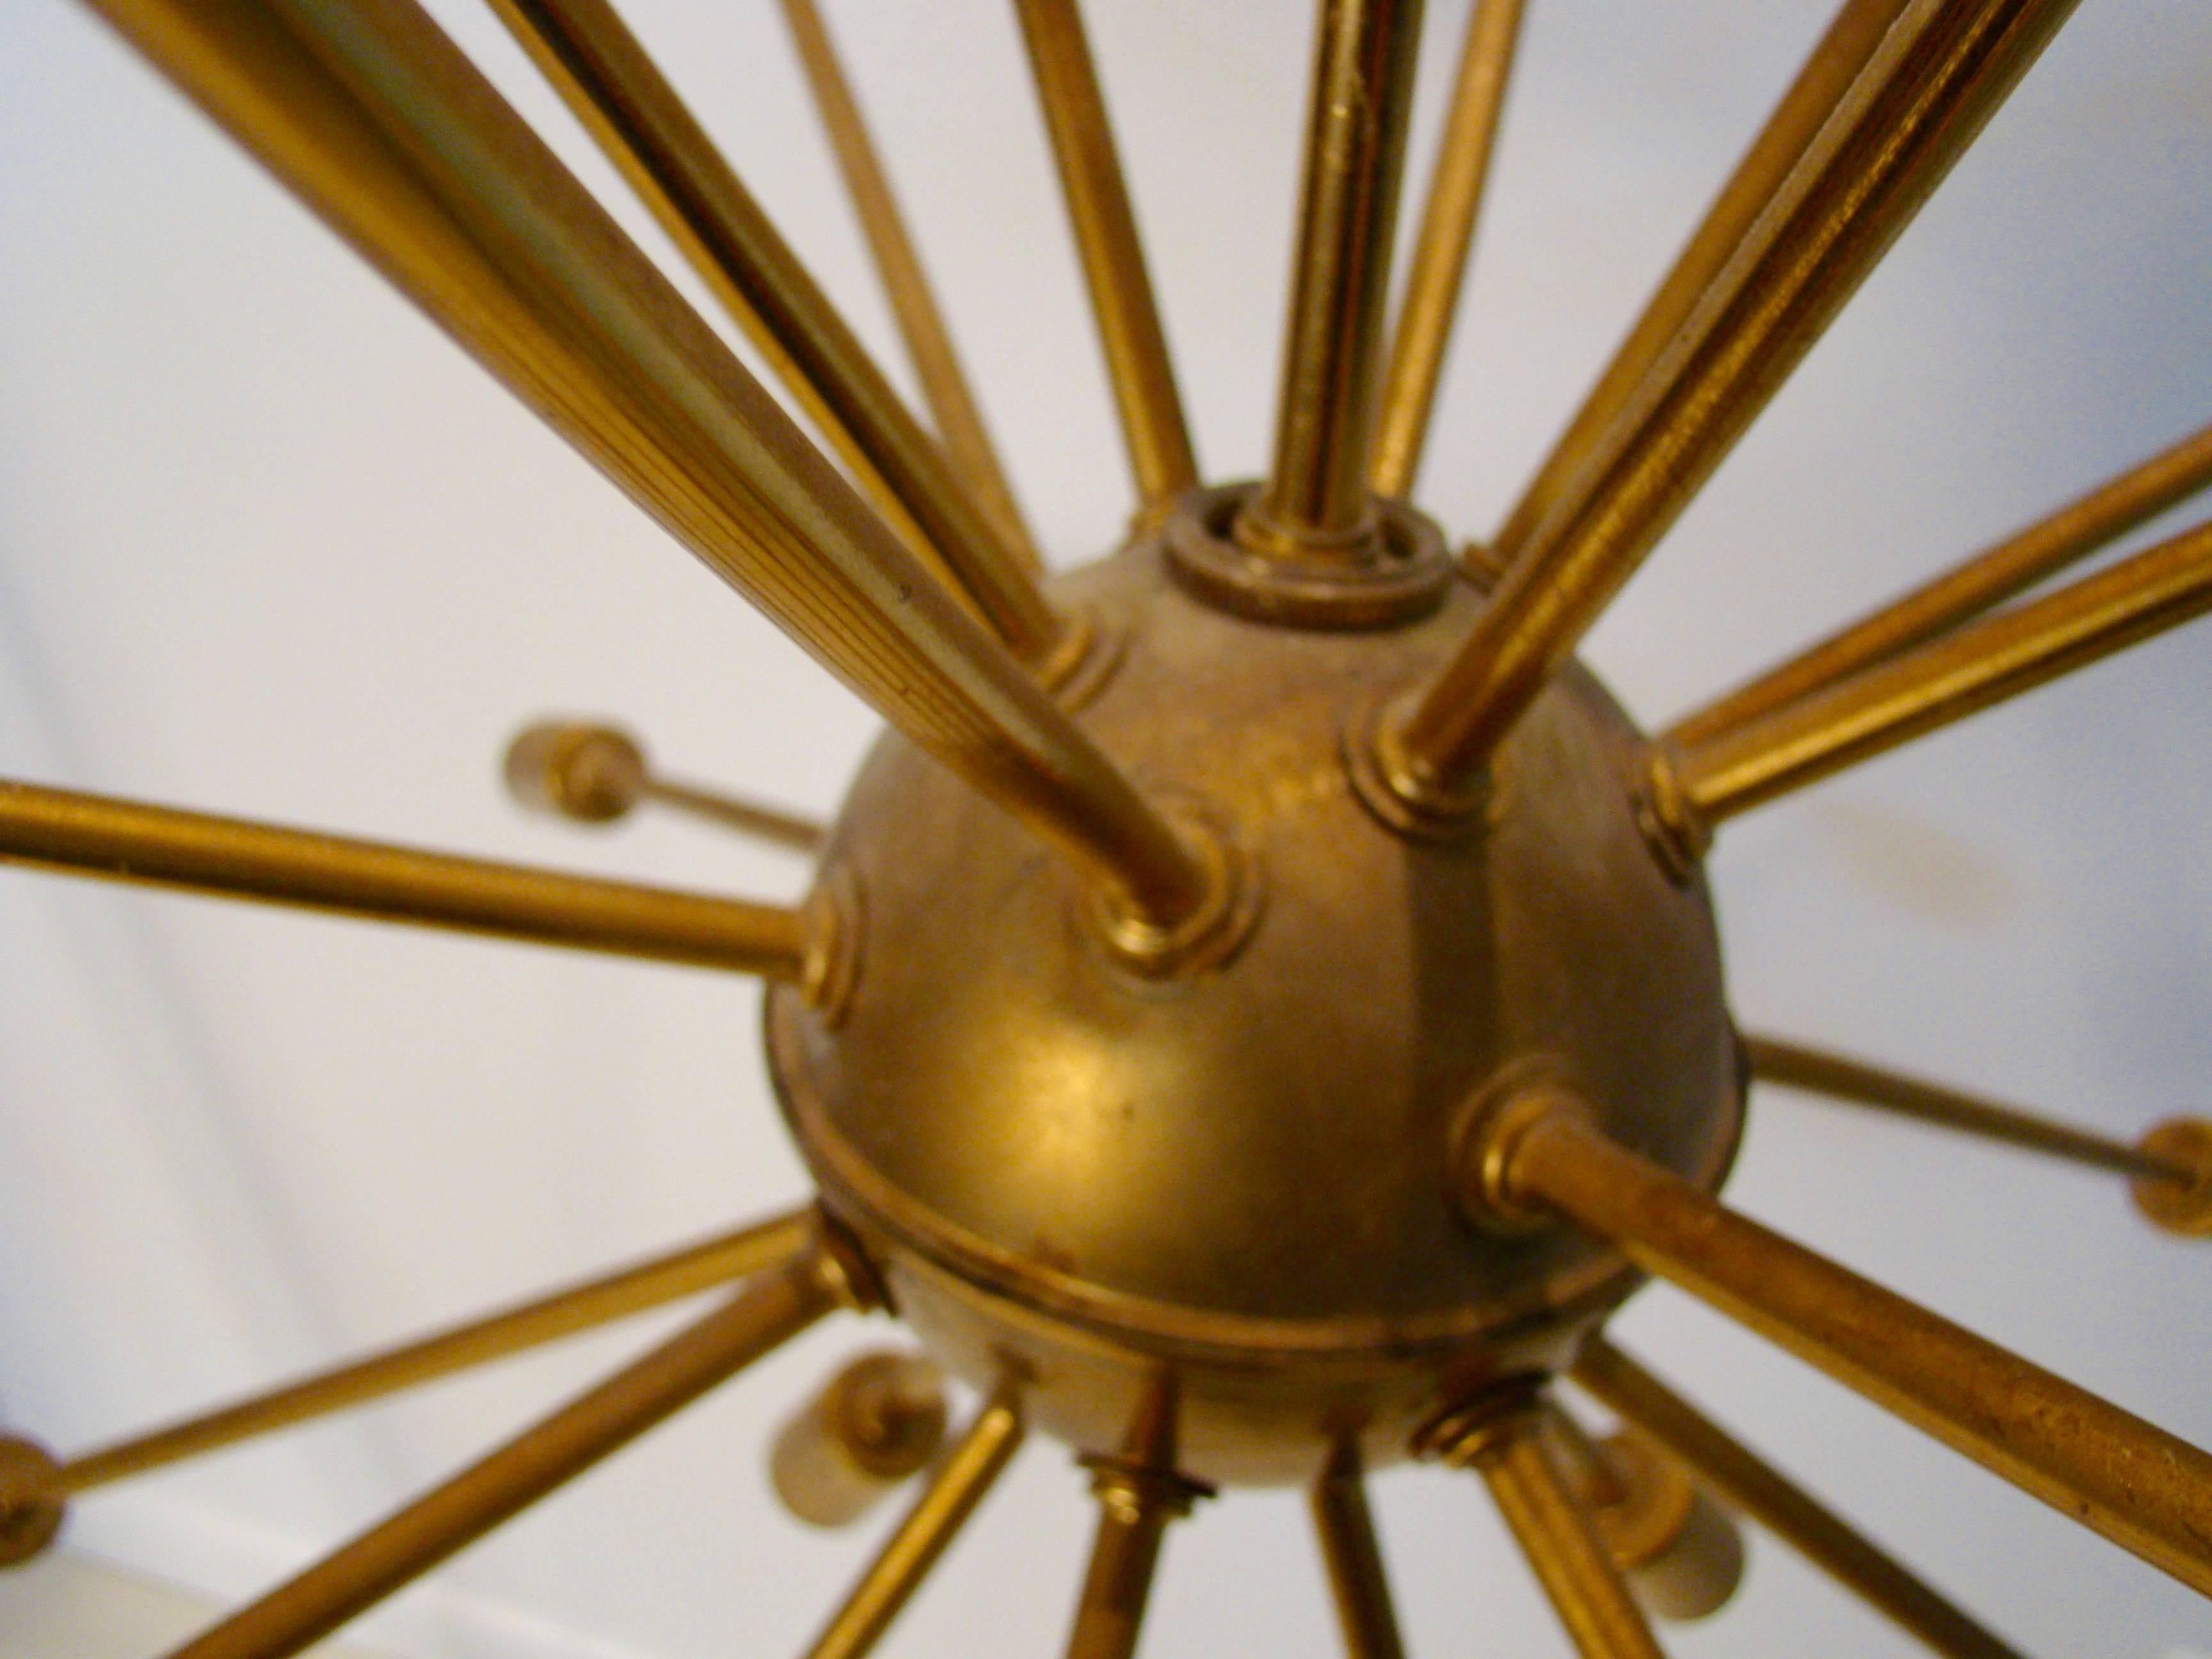 Beautiful brass Sputnik light fixture aged with a warm patina.

Measures: 24